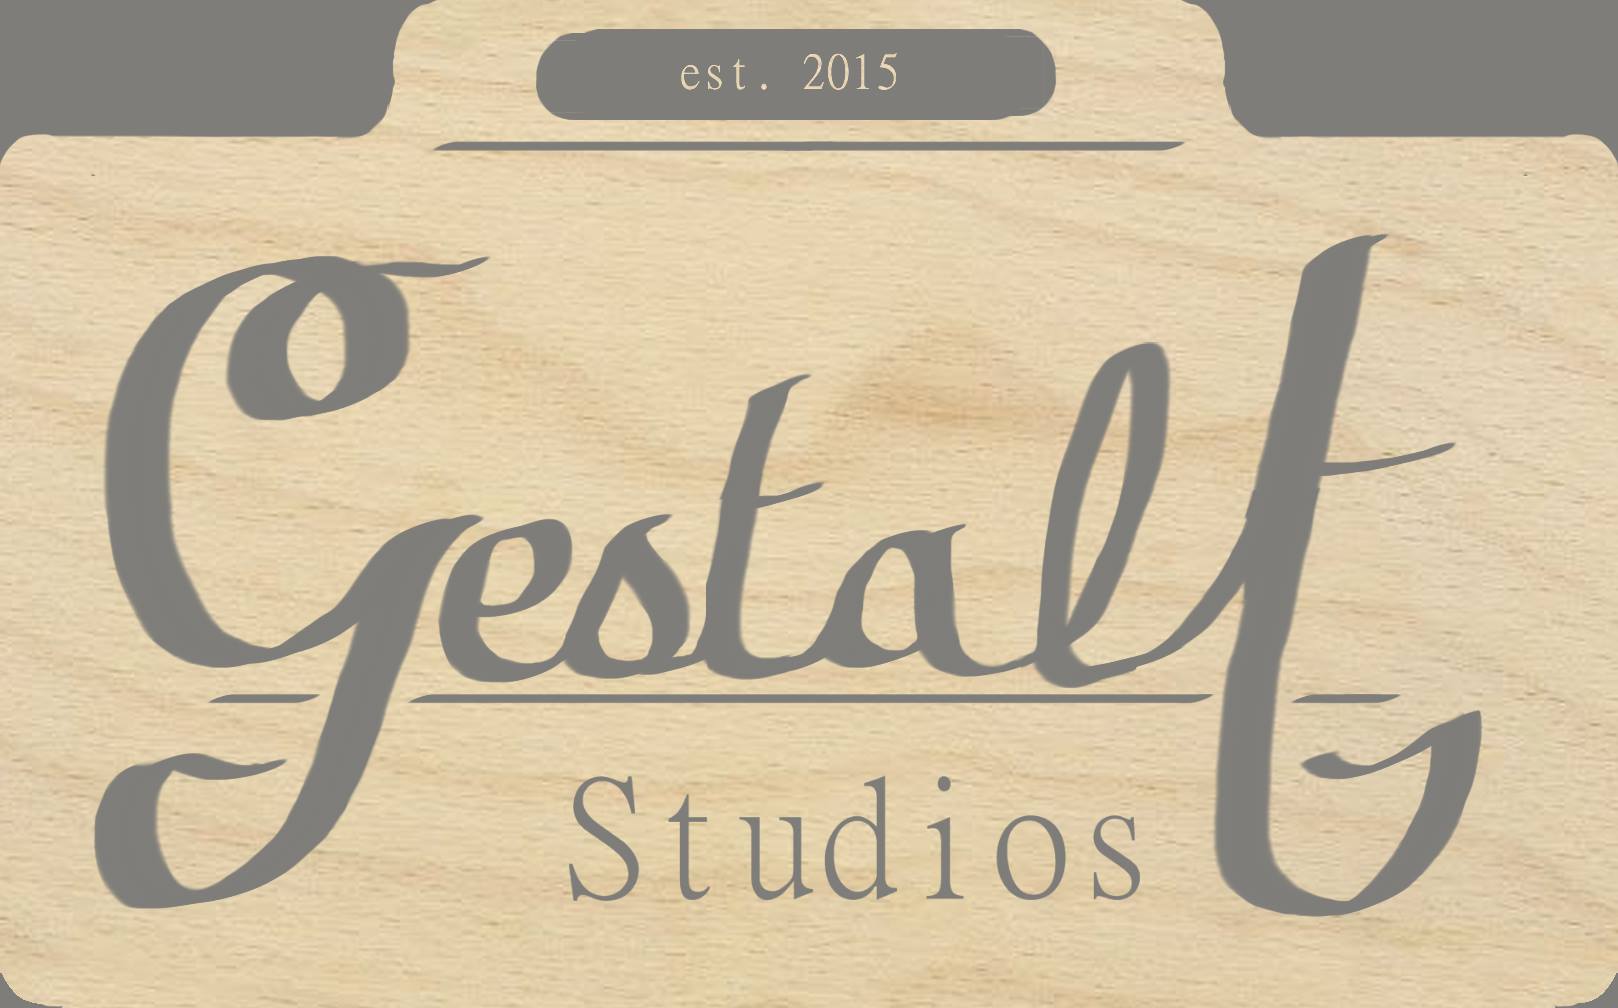 Gestalt Studios